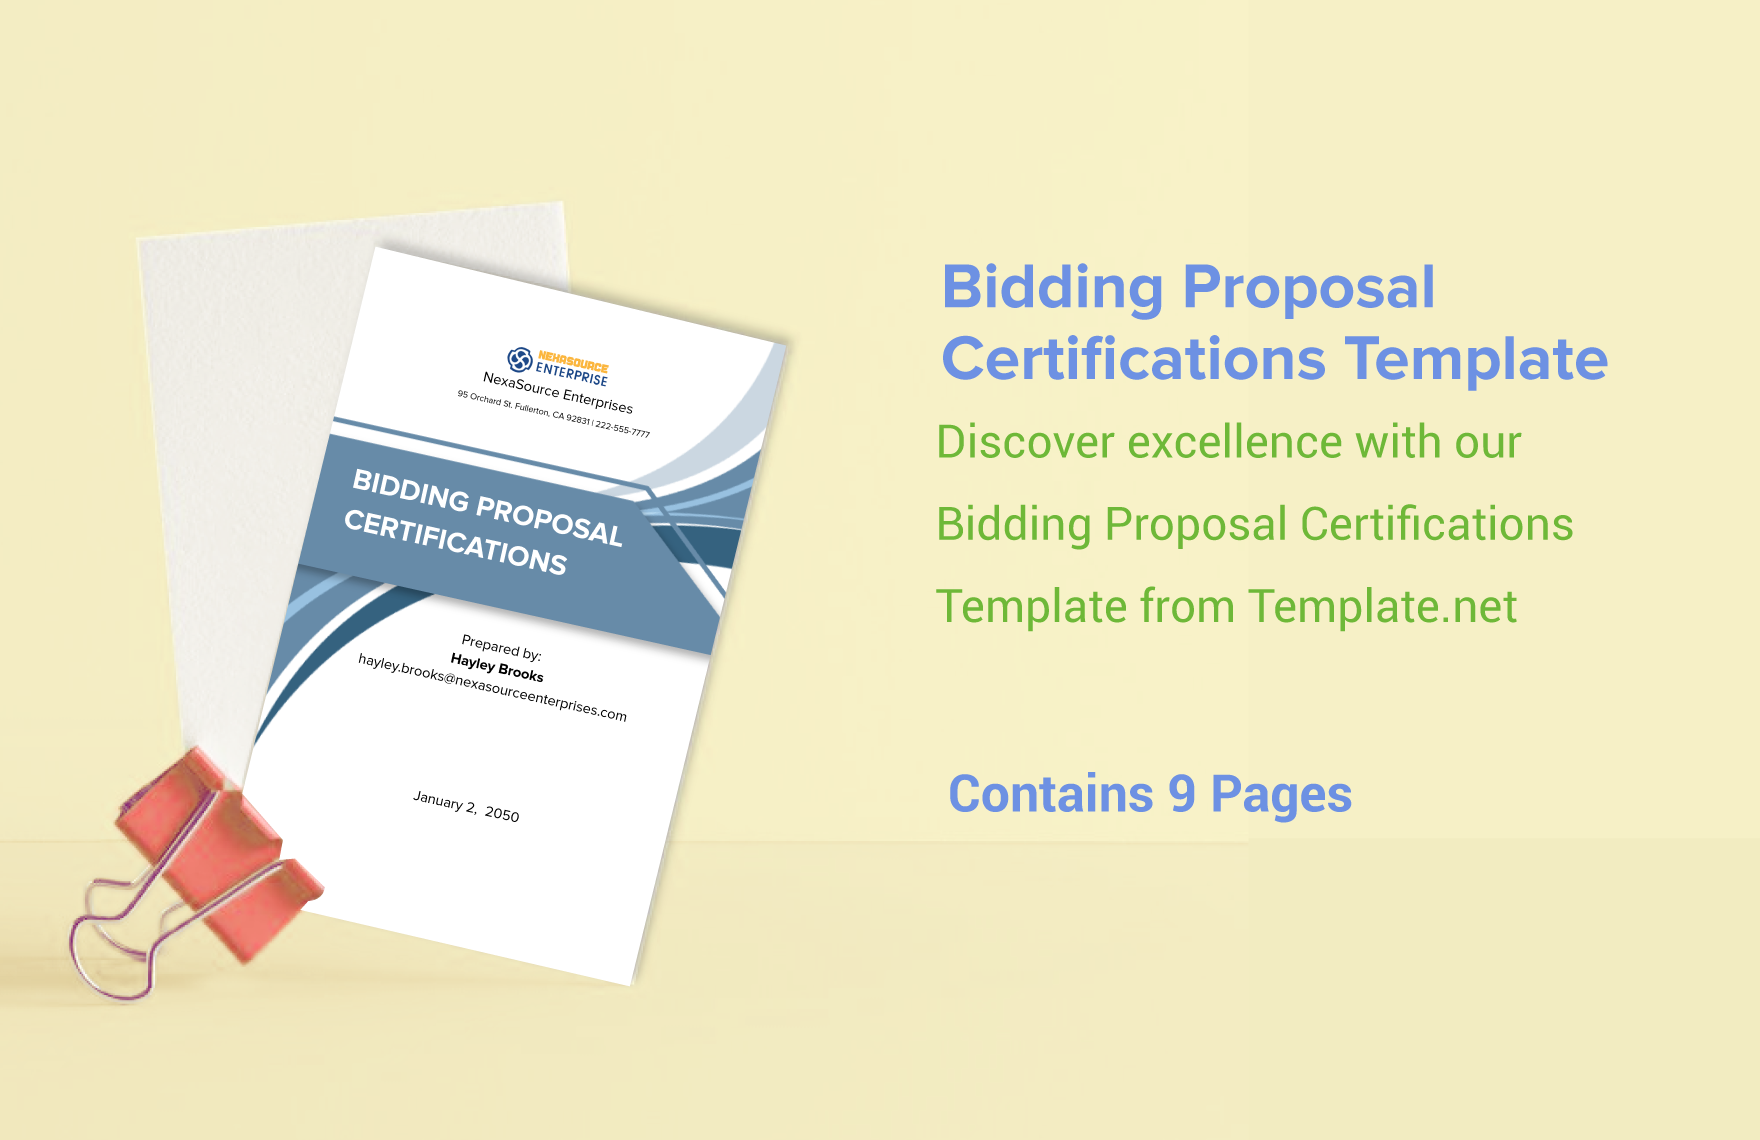 Bidding Proposal Certifications Template